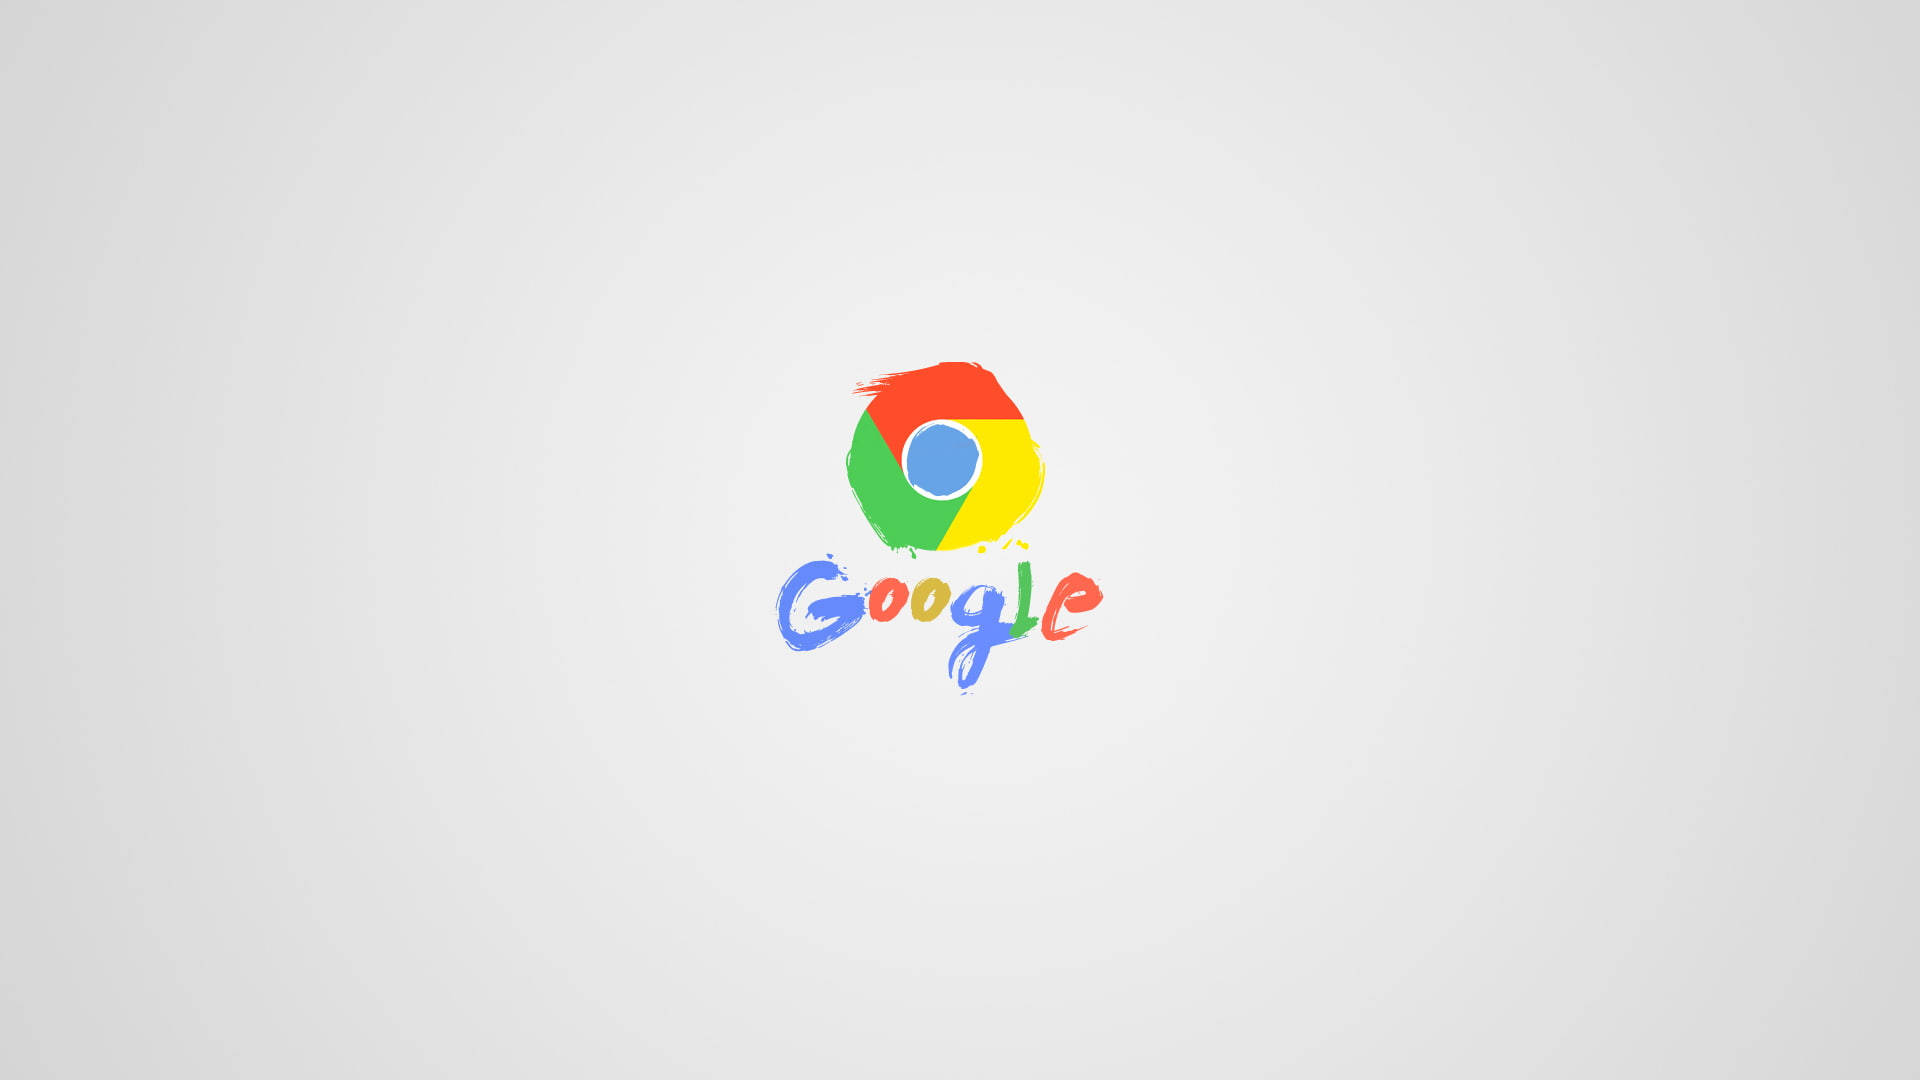 Gmail Google Digital Paintwork Wallpaper